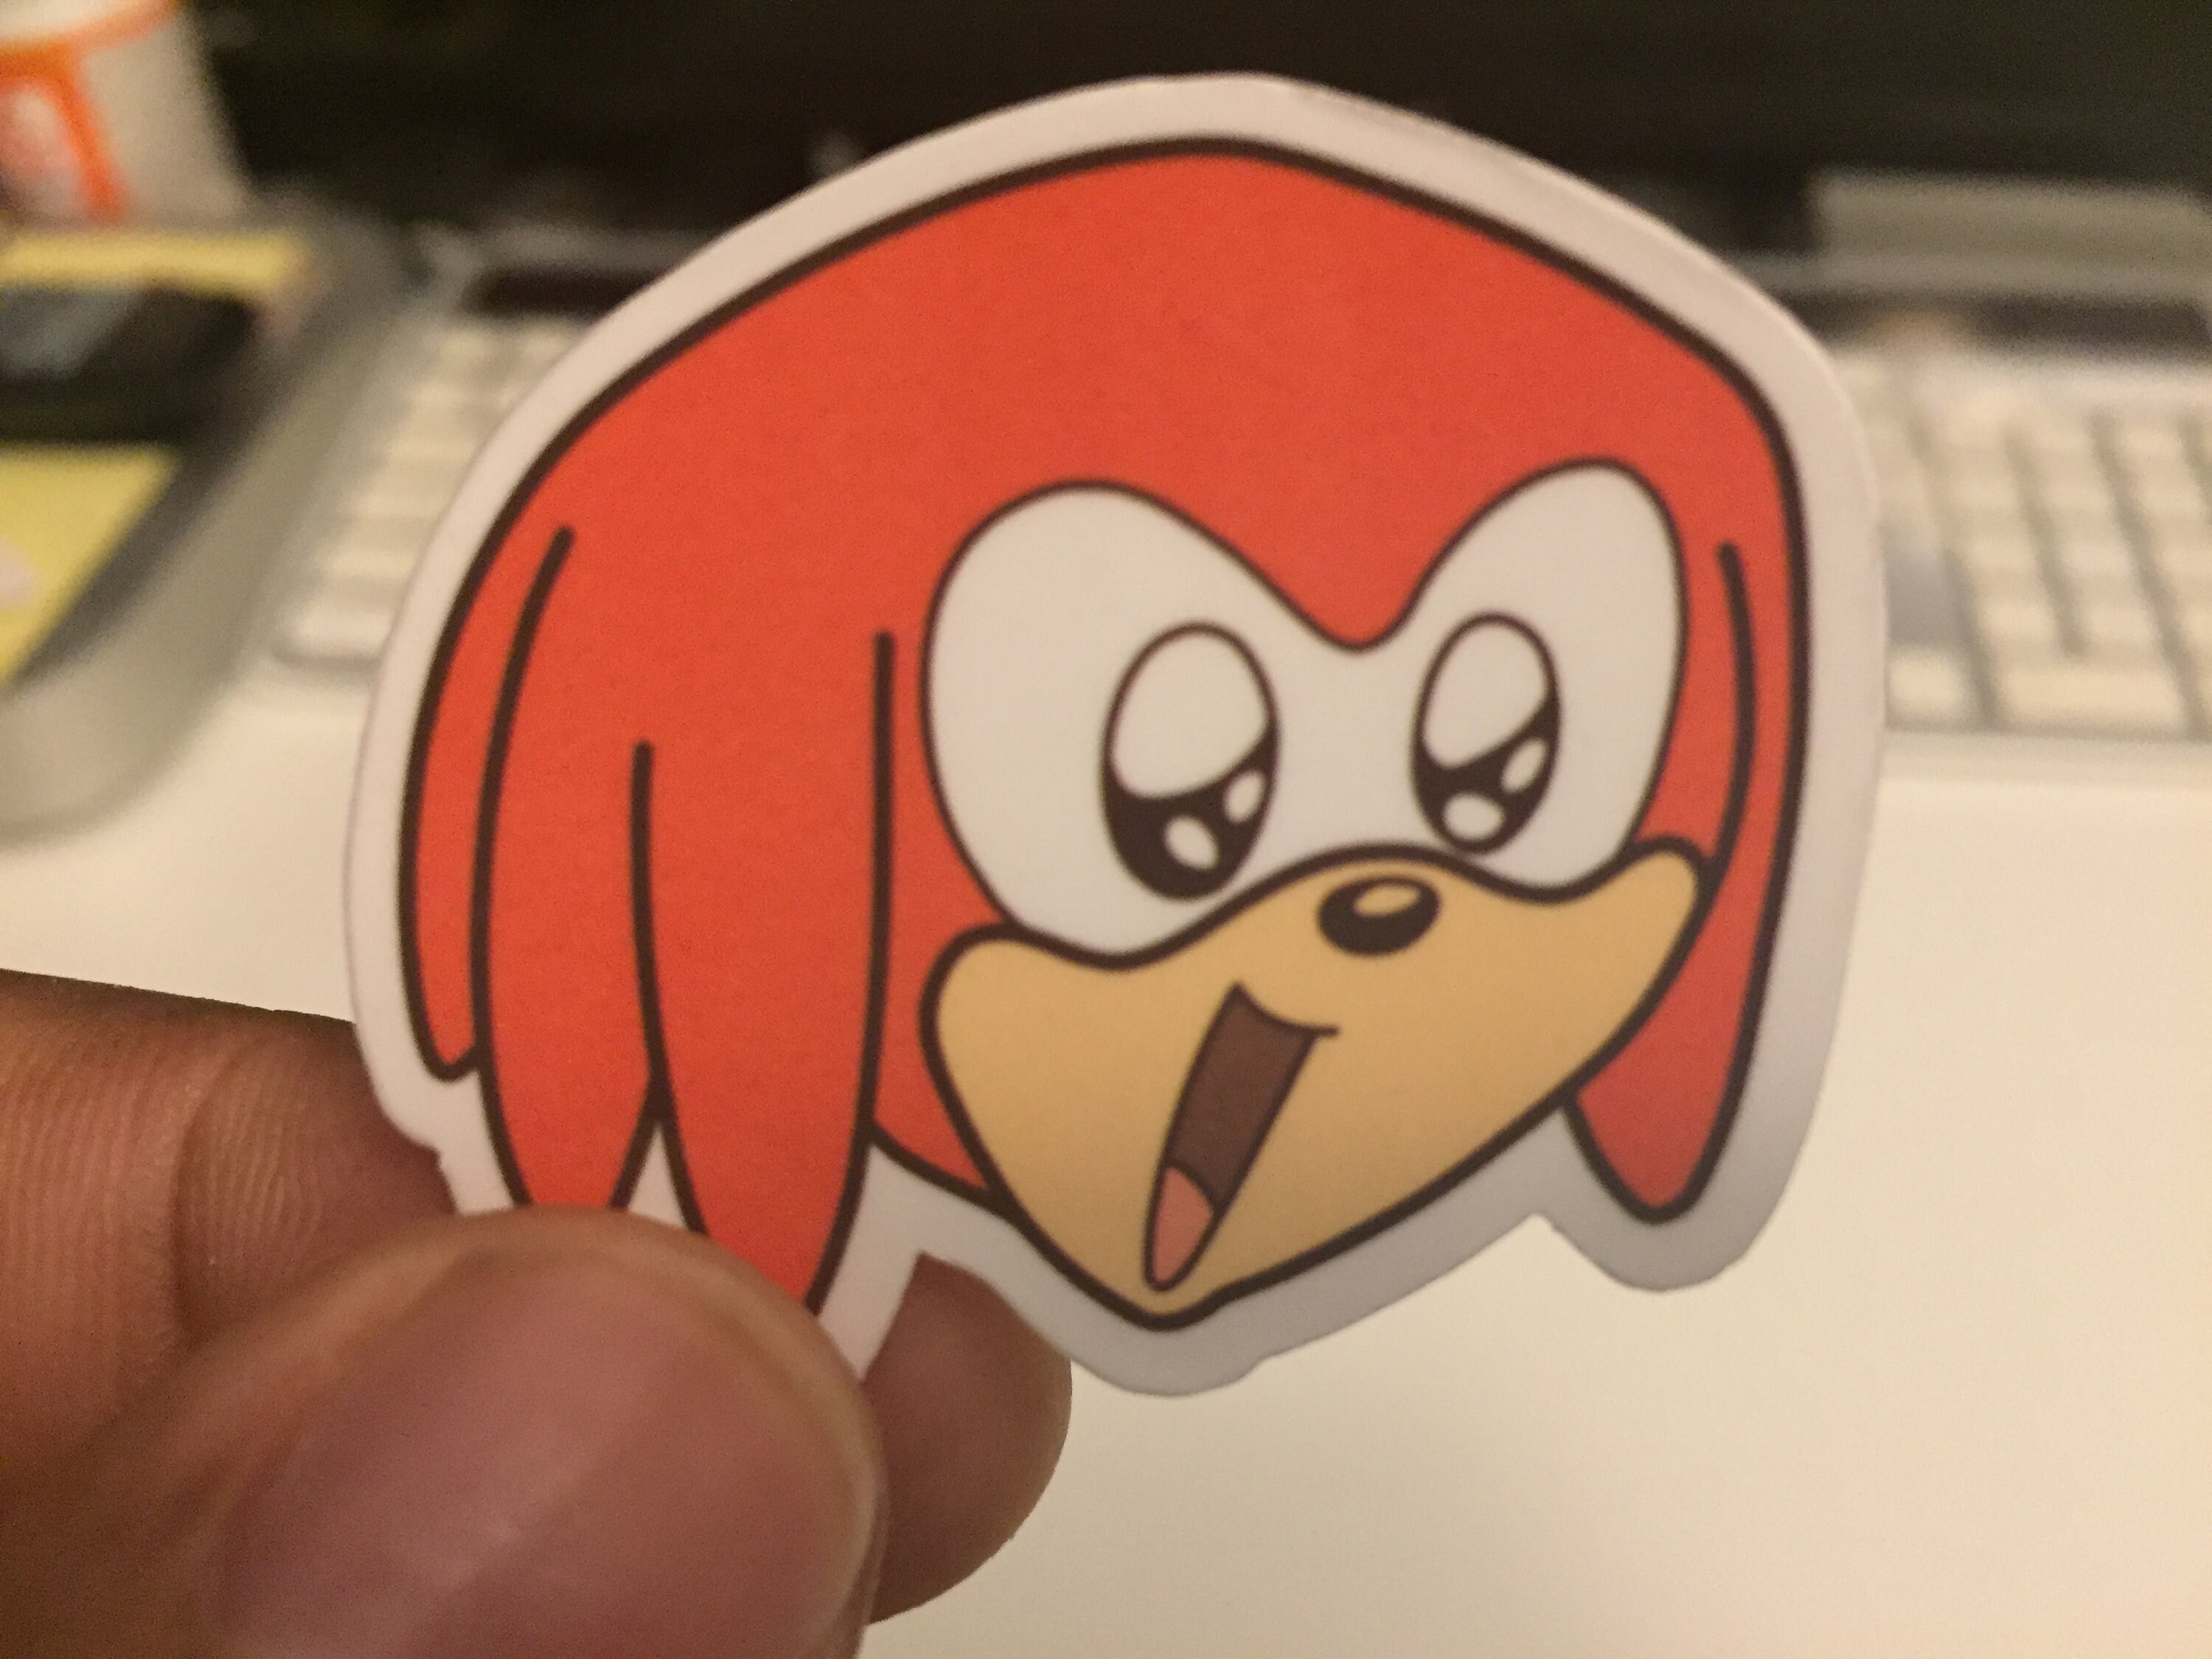 Sonic The Hedgehog™ Stickers (In Folders)